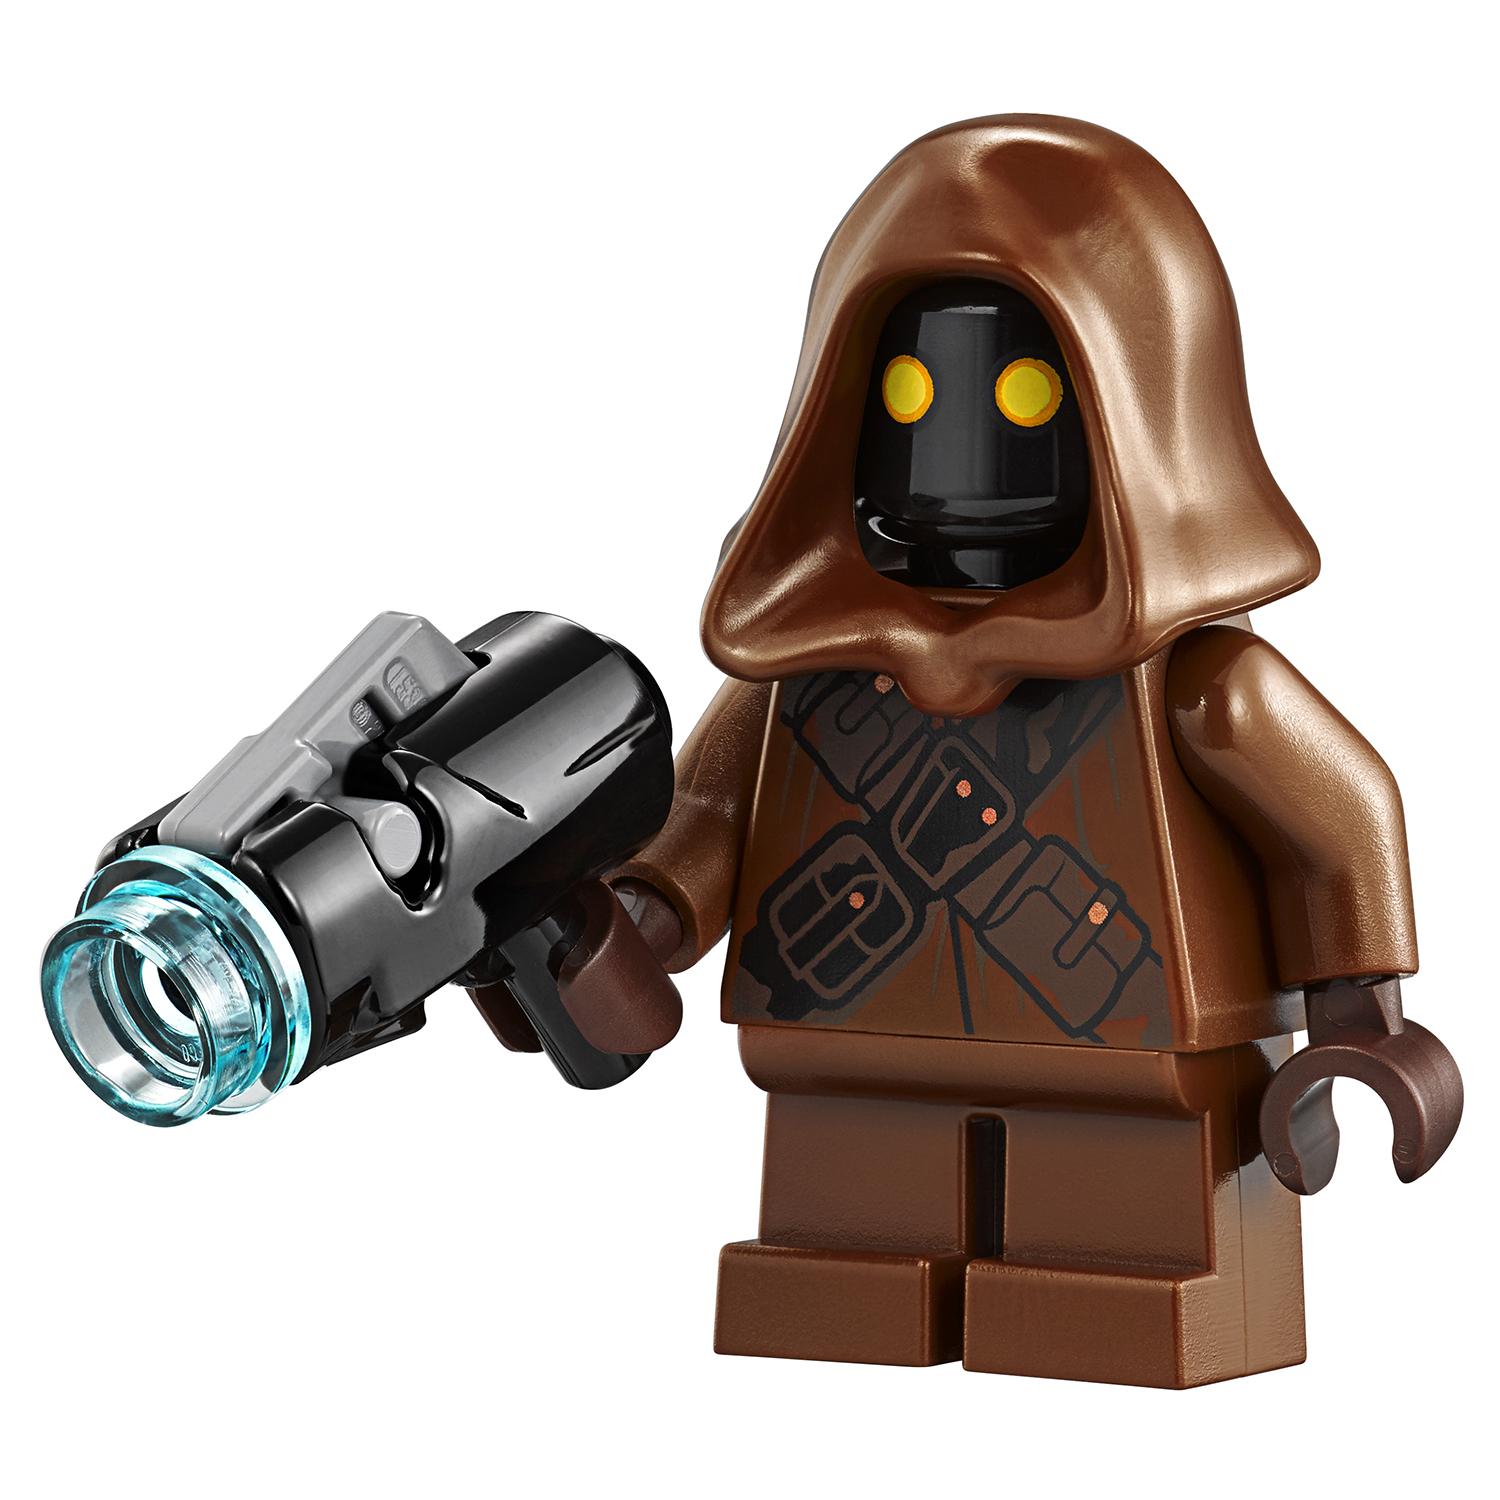 Lego Star Wars 75198 Боевой набор планеты Татуин